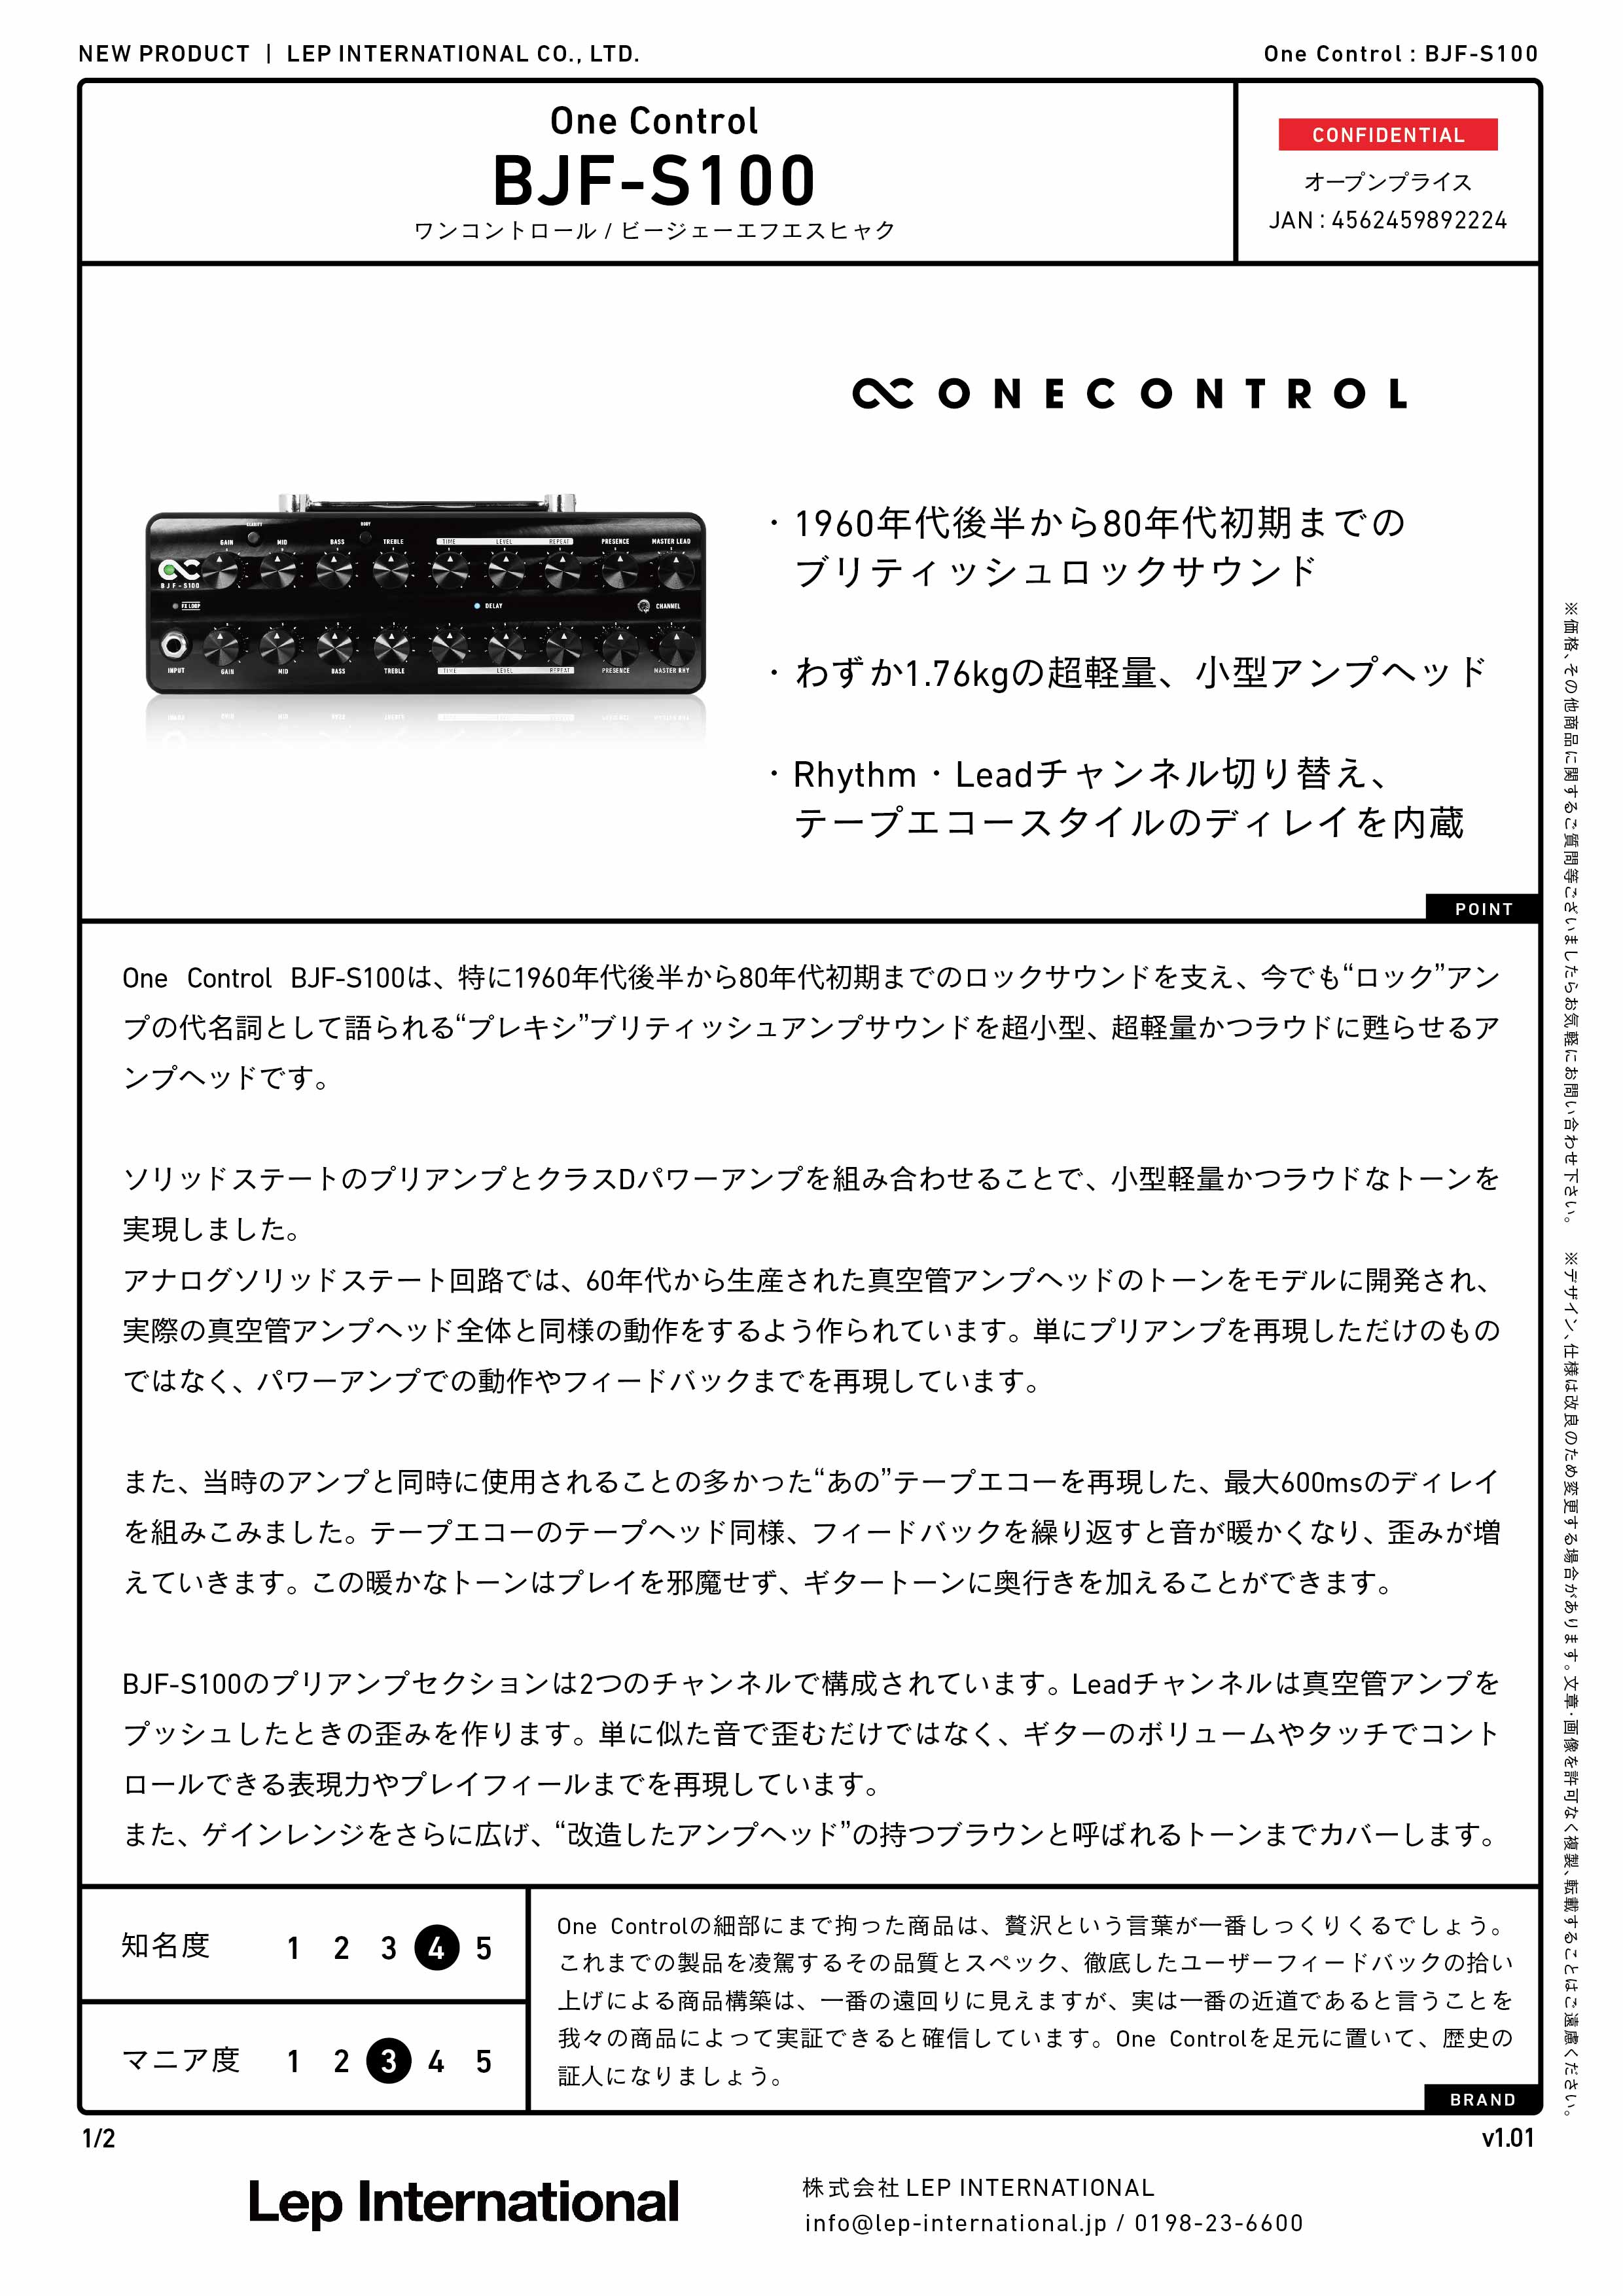 One Control / BJF-S100 – LEP INTERNATIONAL